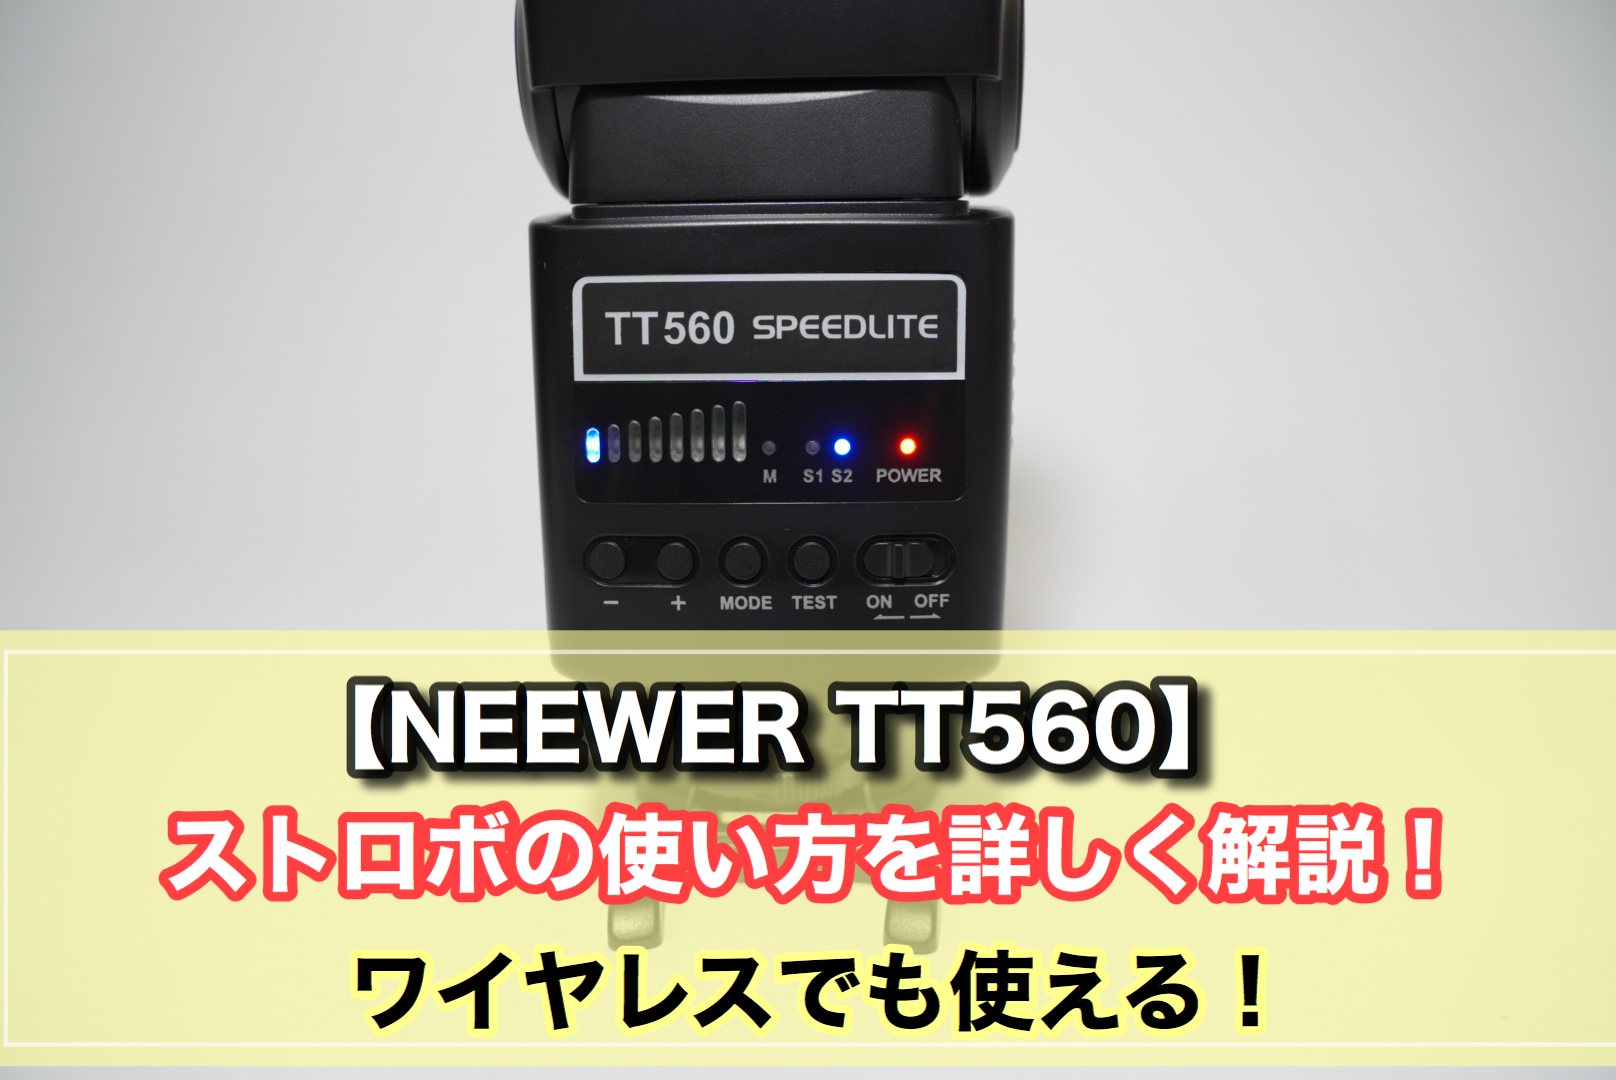 NEEWER TT560 スピードライト GN38 ワイヤレス送受信機セット